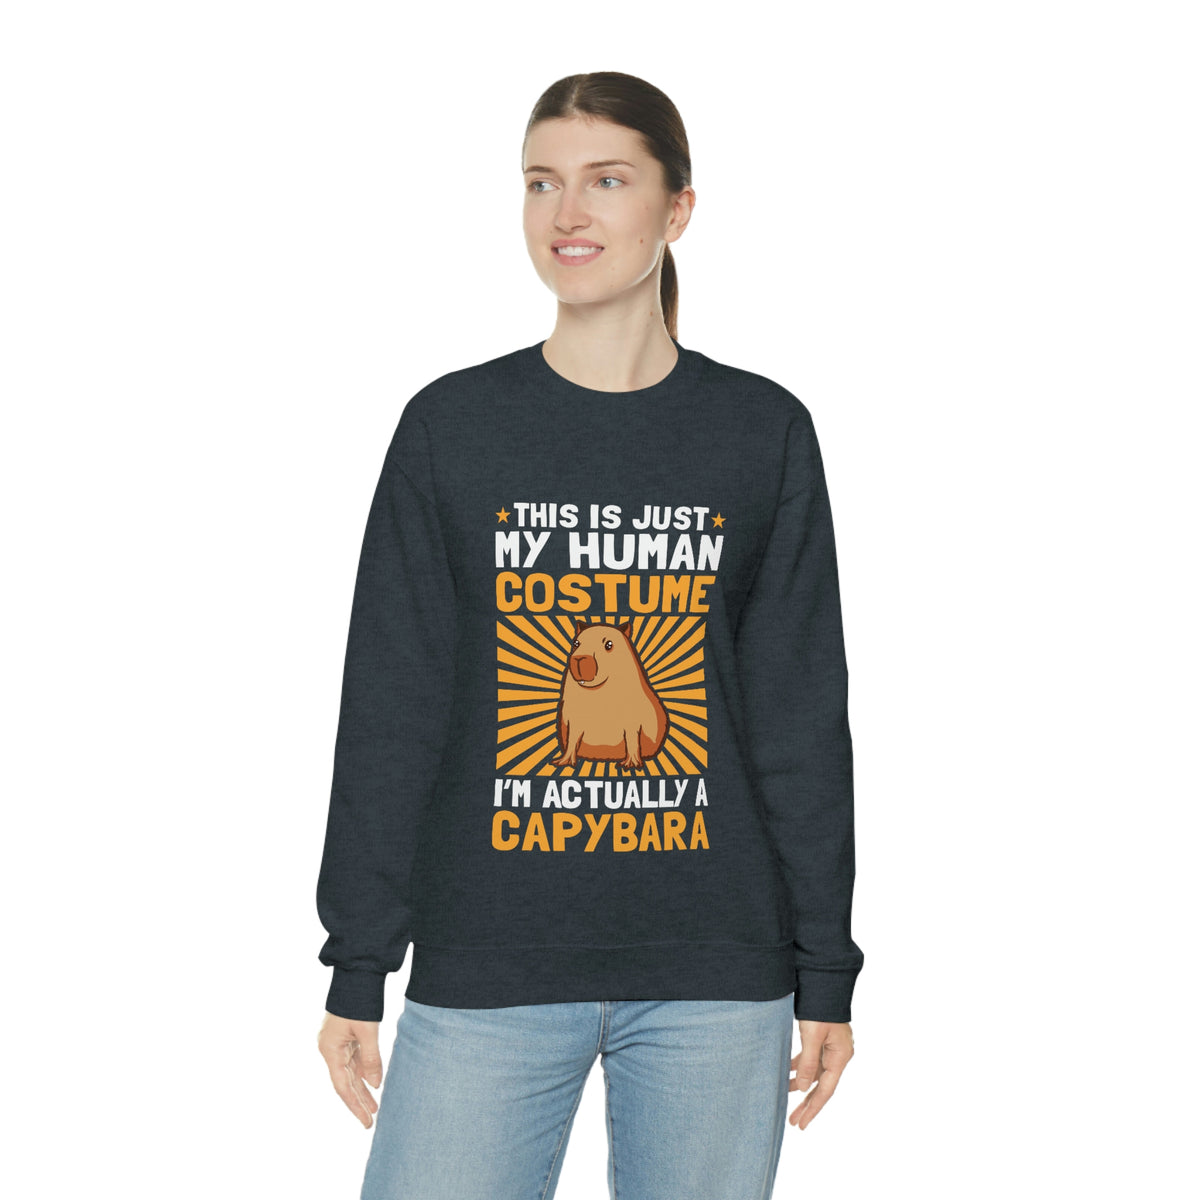 This is my human costume - Unisex Sweatshirt